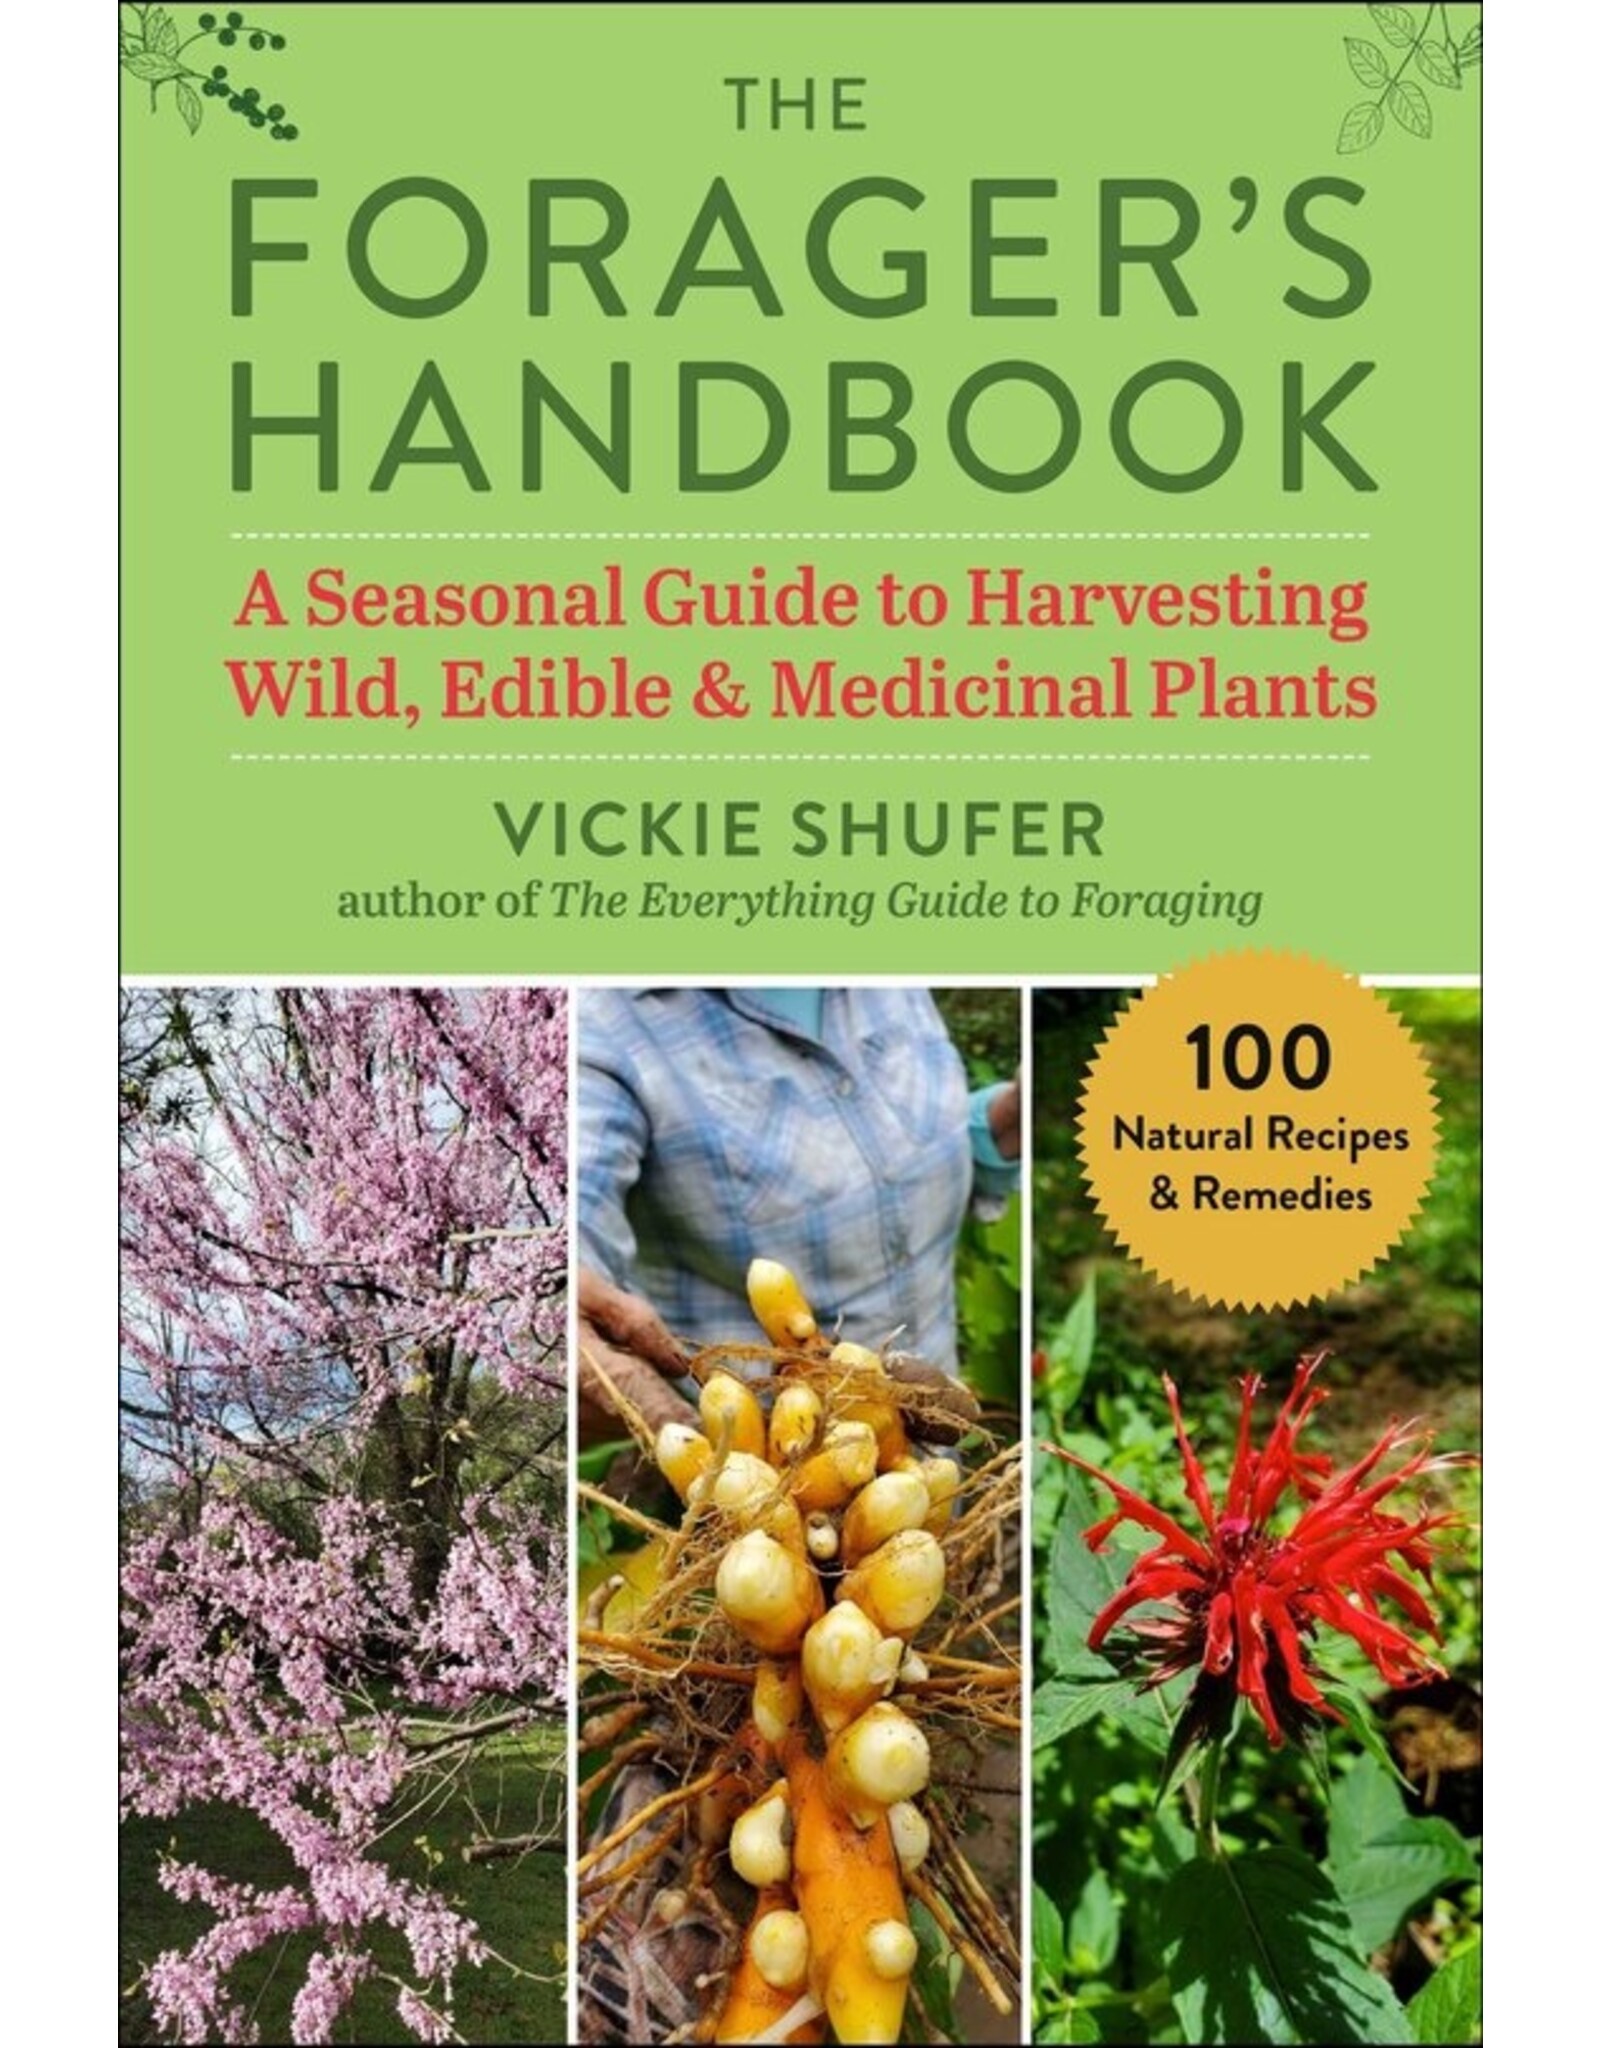 SKYHORSE PUBLISHING The Forager's Handbook: A Seasonal Guide to Harvesting Wild, Edible & Medicinal Plants